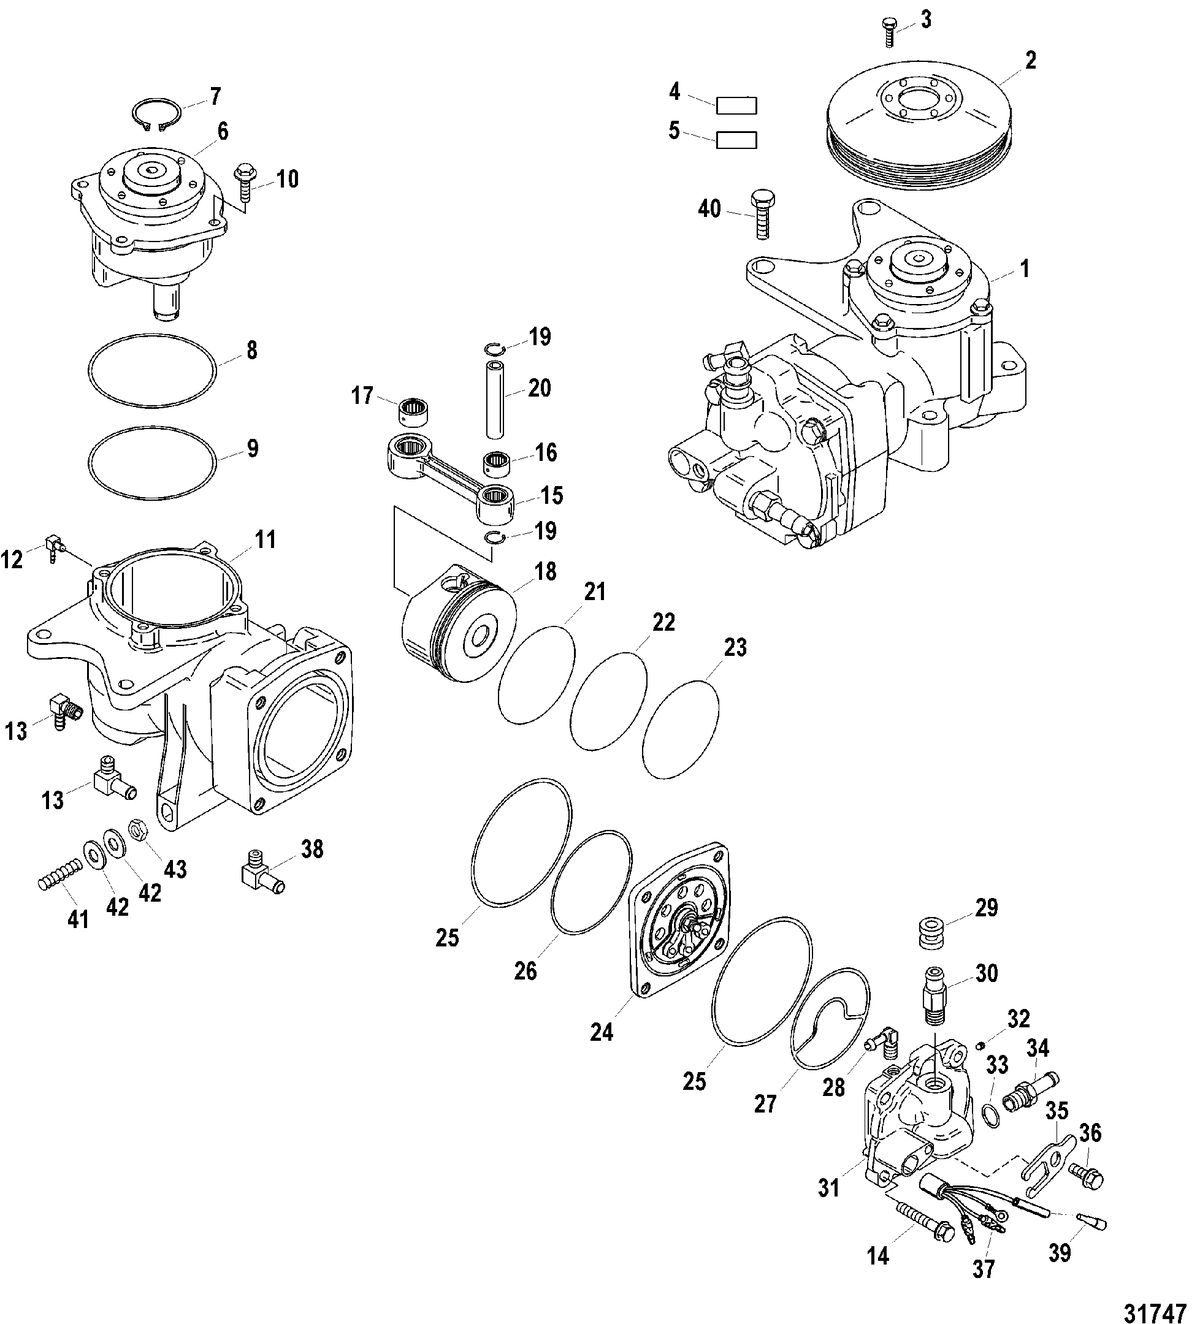 SPORTJET 200 DFI JET DRIVE Air Compressor Components(Design II)